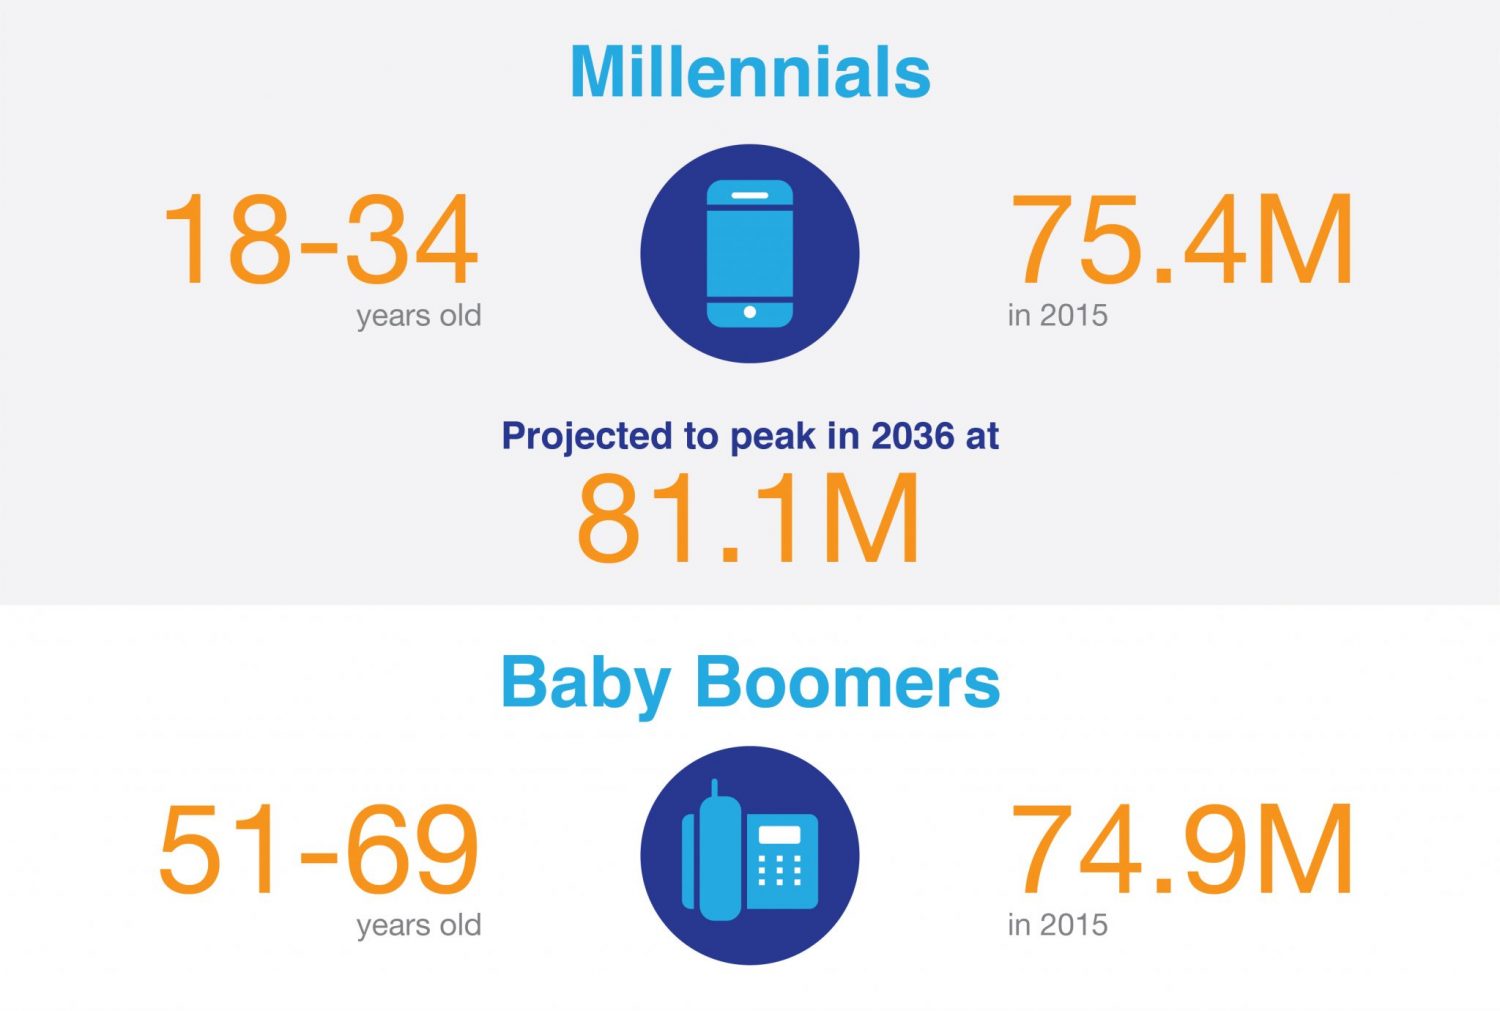 Millennials recently overtook Baby Boomers in population numbers